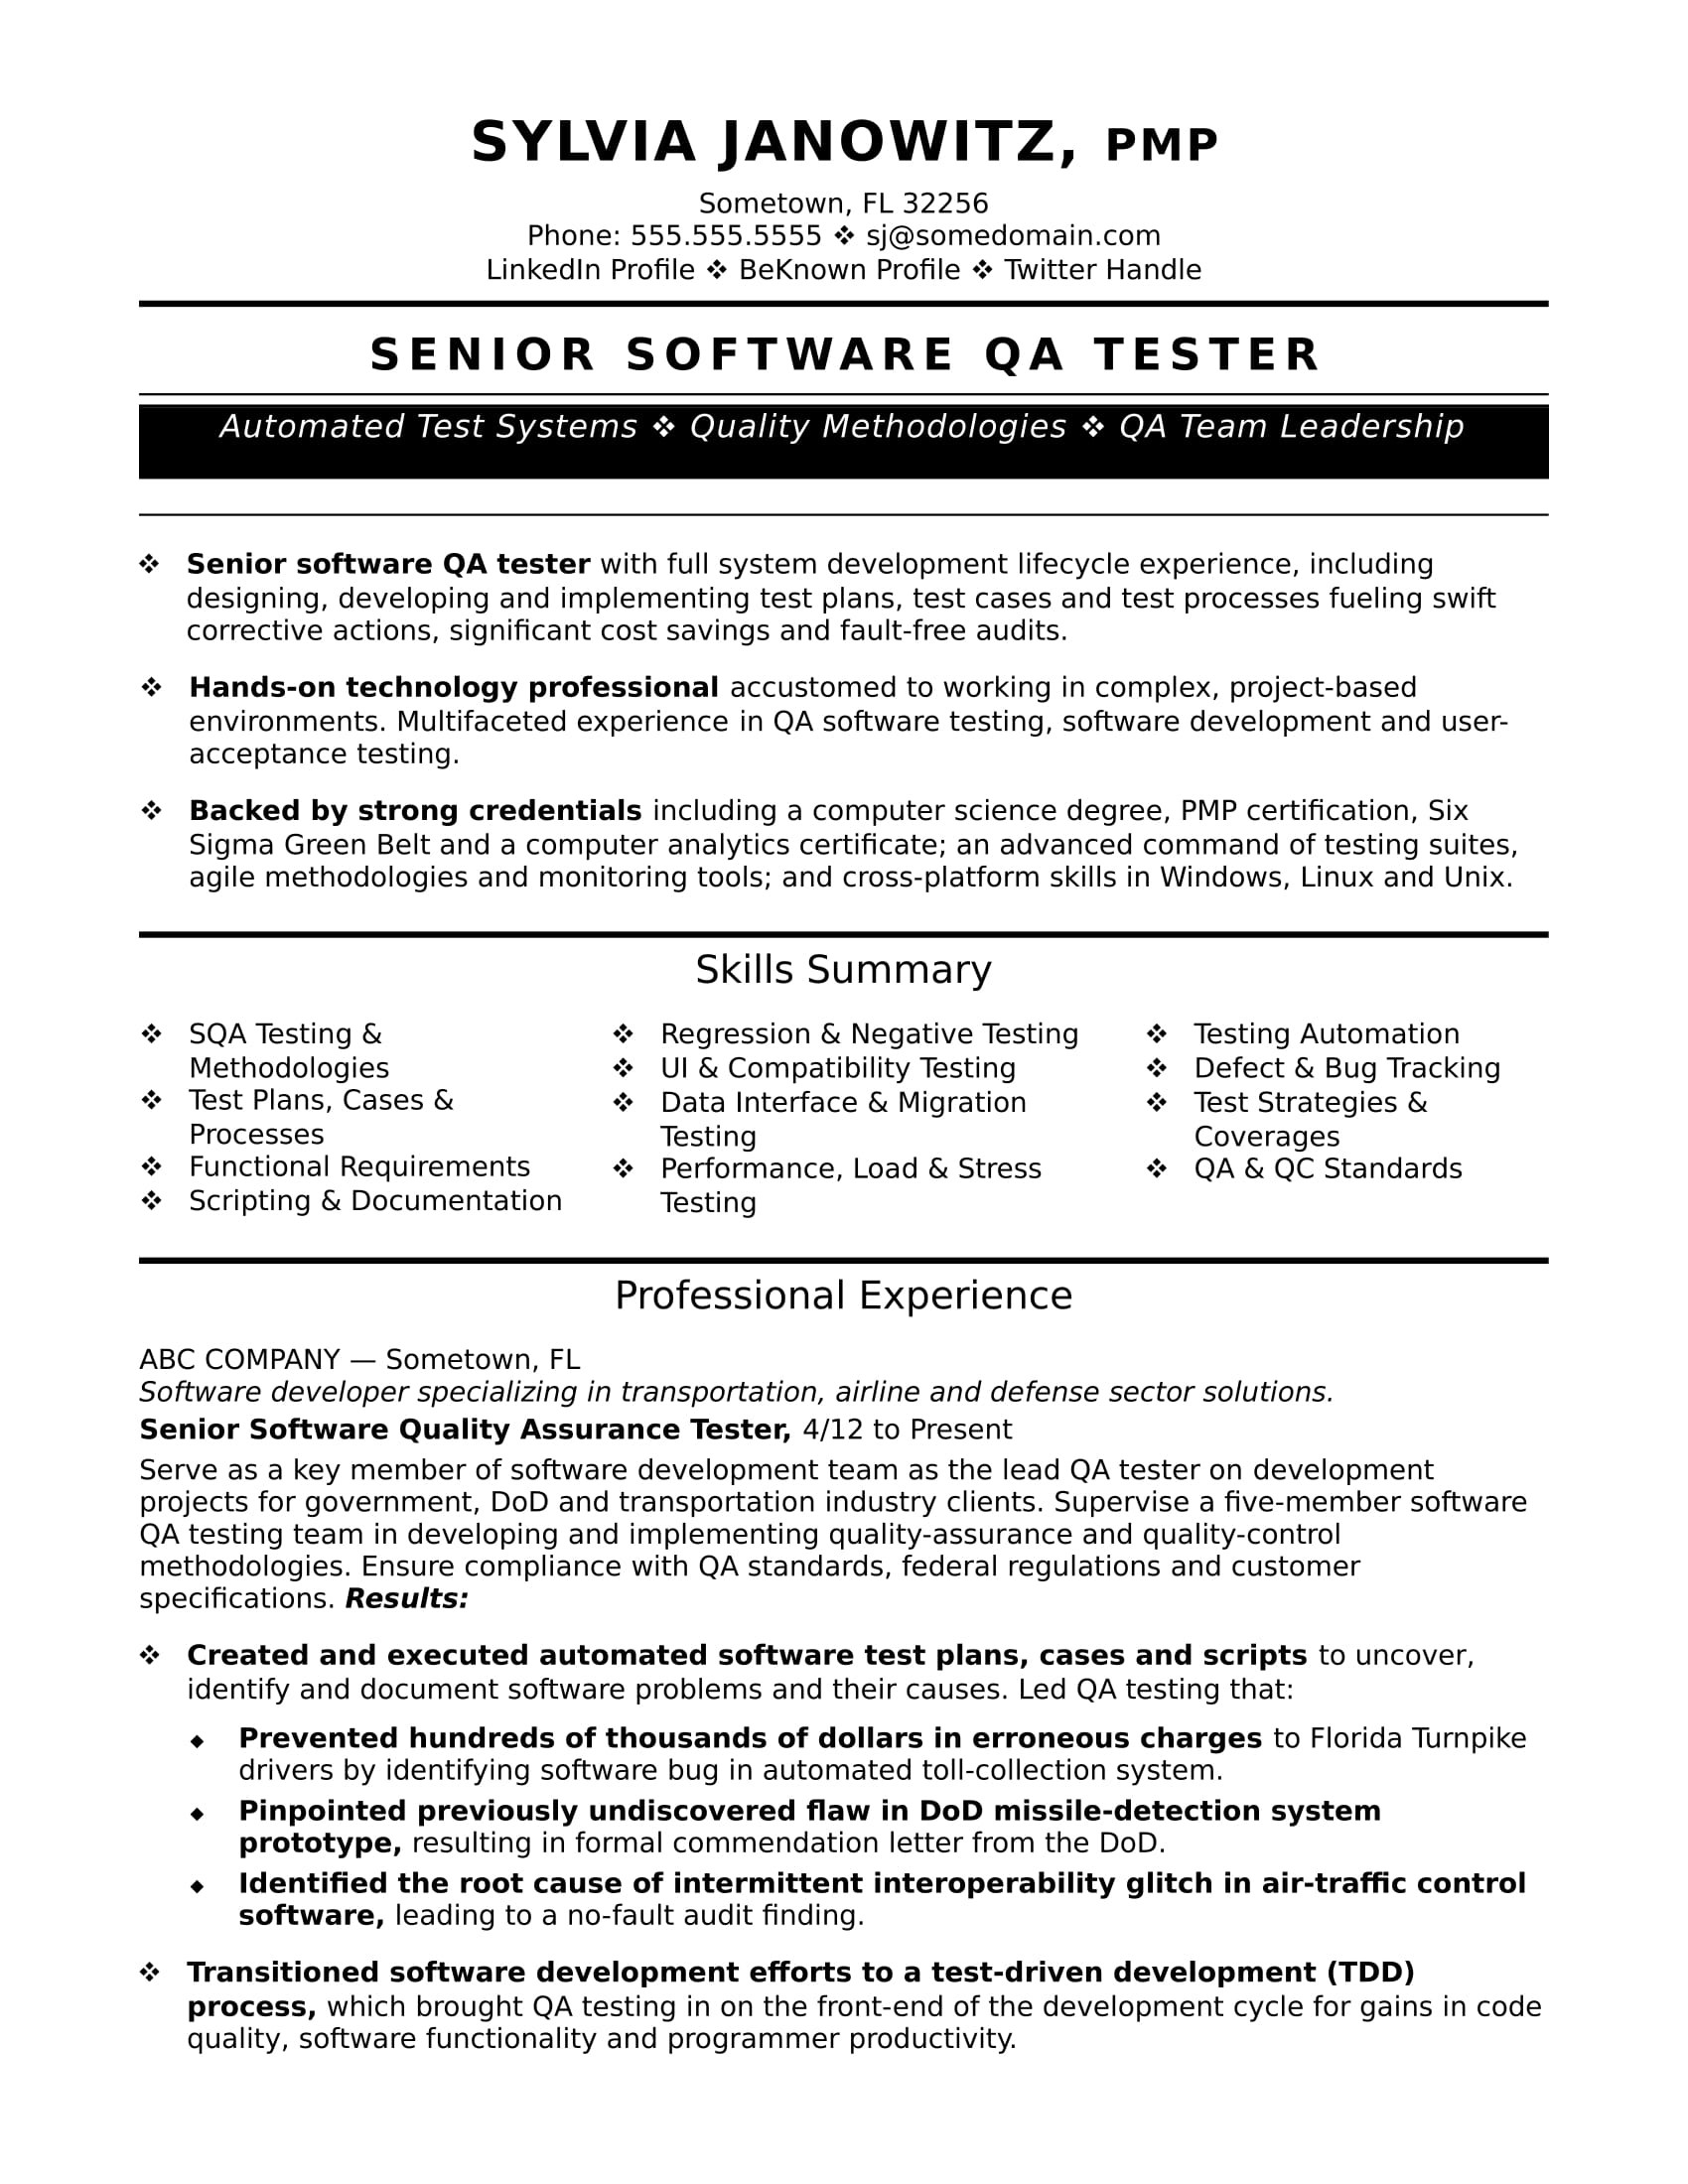 Software Testing Resume Samples 10 Years Experience Experienced Qa software Tester Resume Sample Monster.com